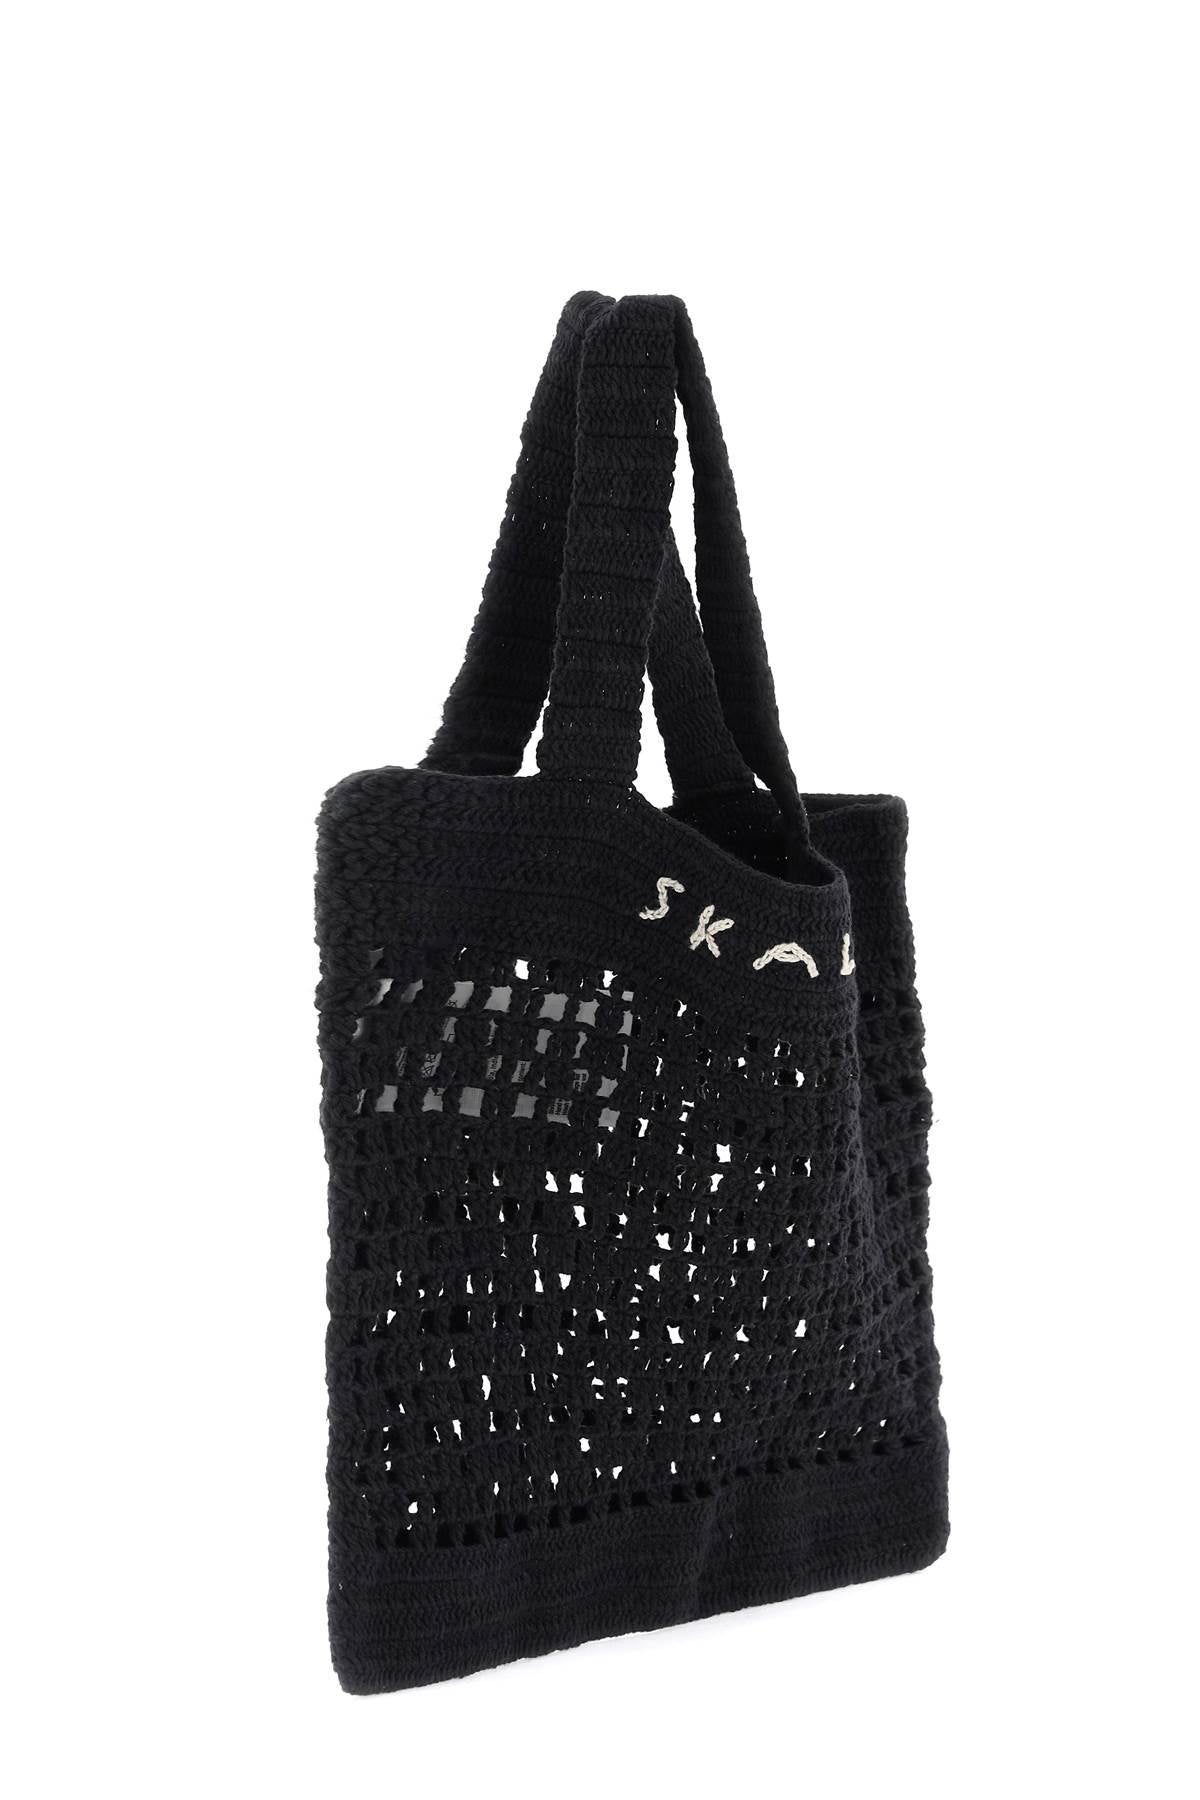 Skall studio evalu crochet handbag in 9-2